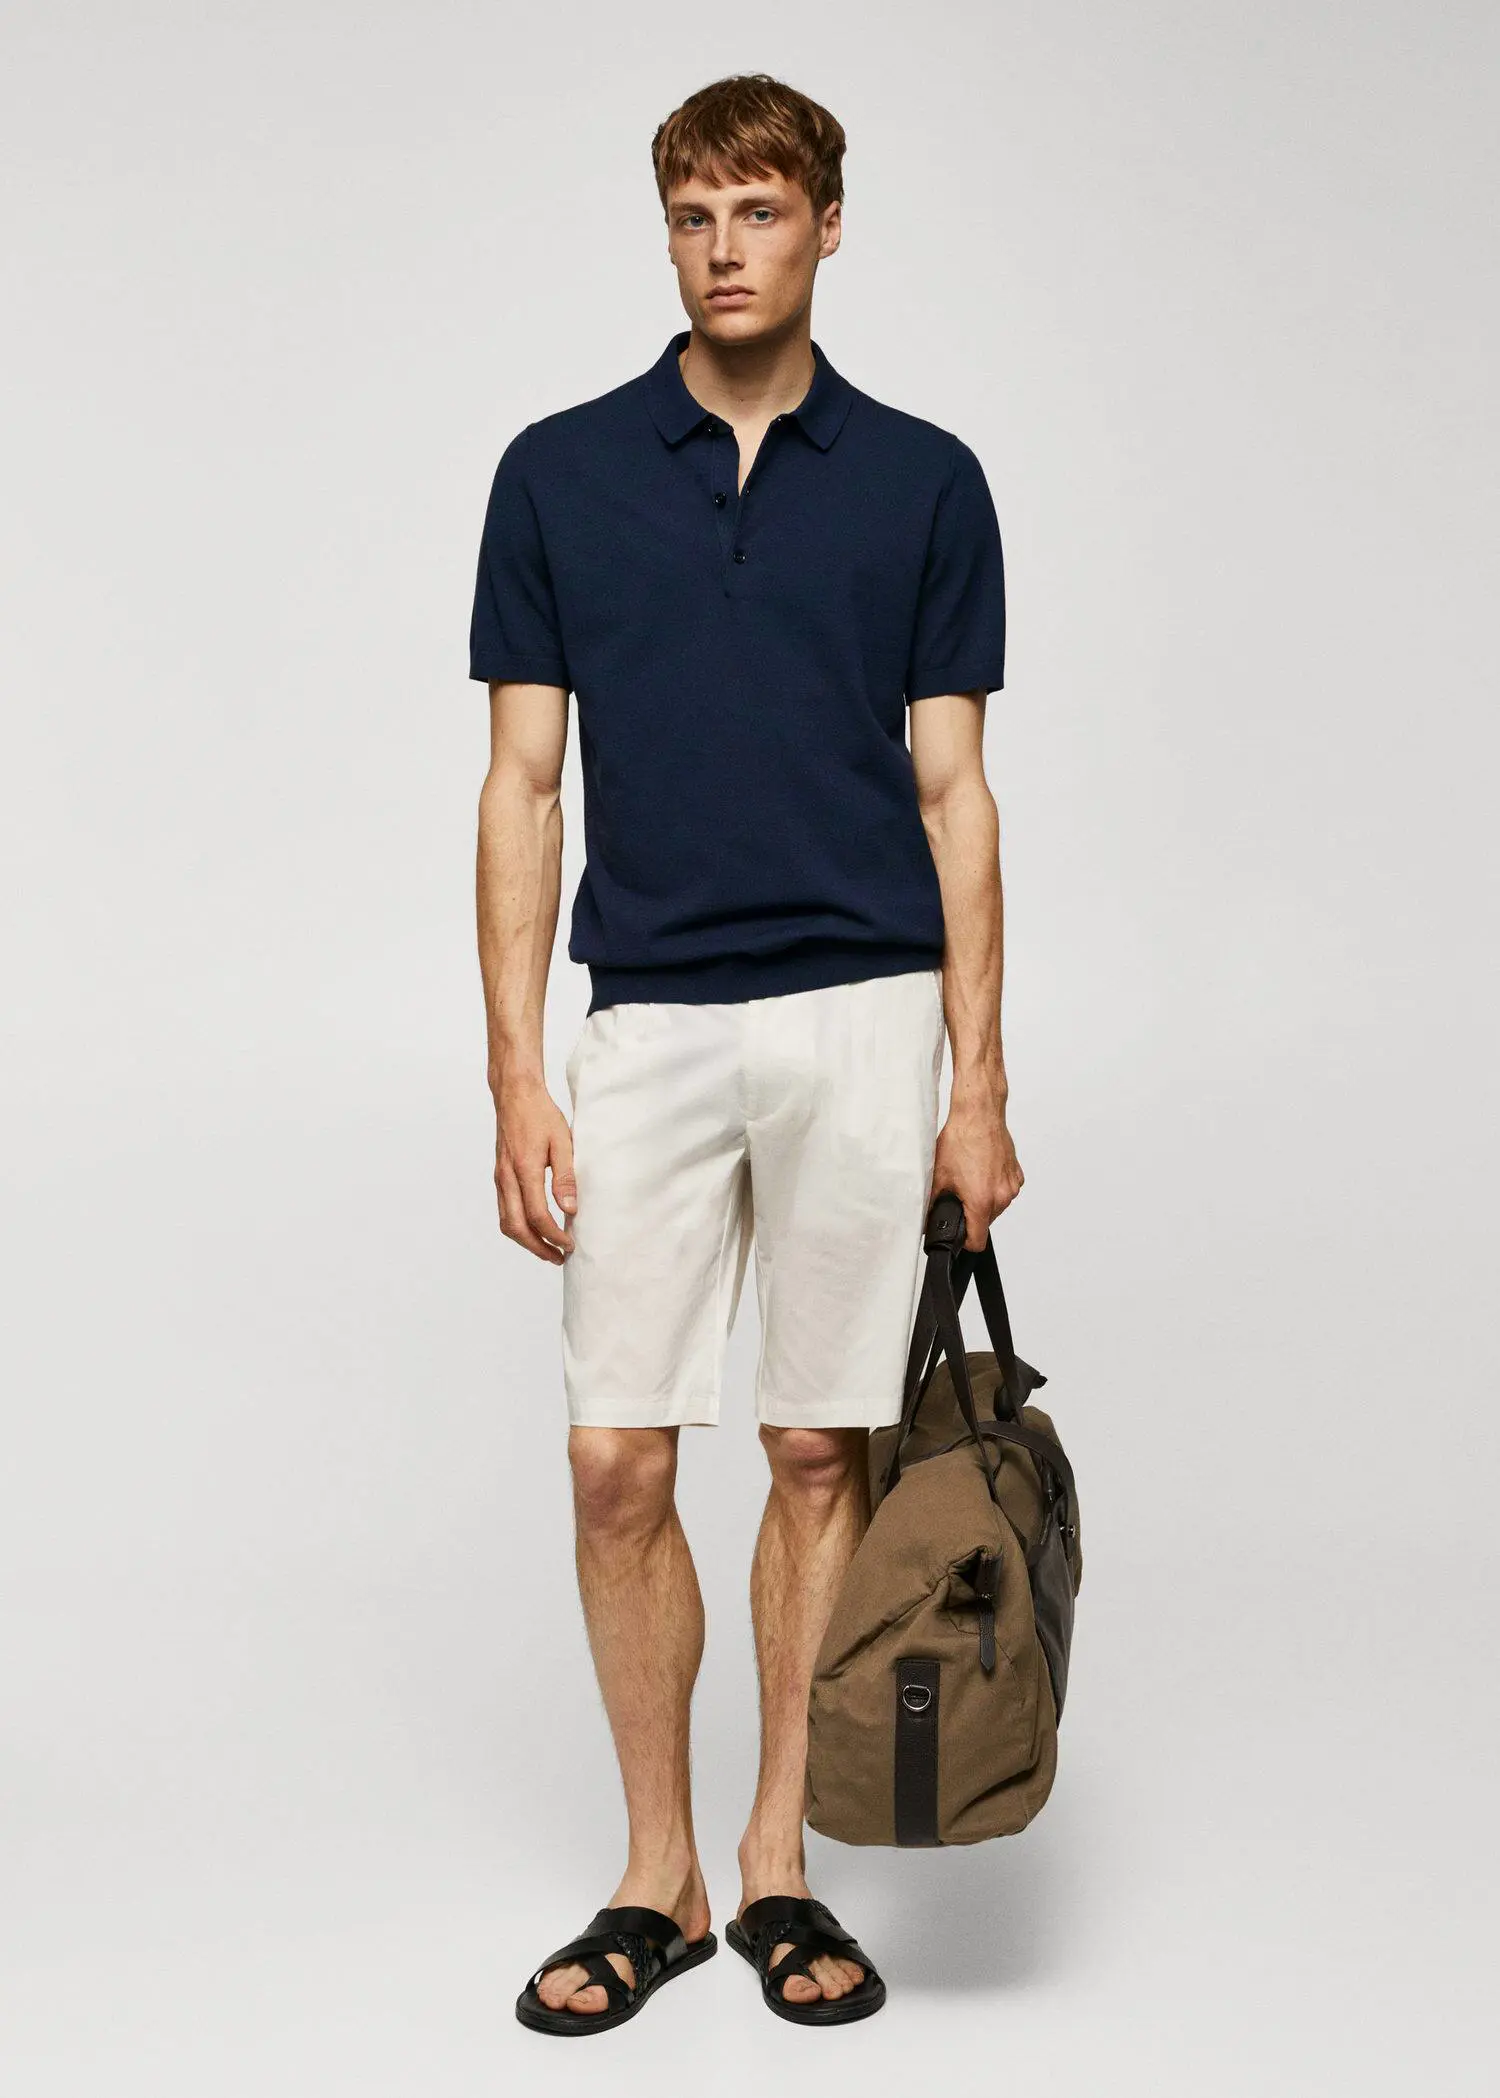 Mango Fine-knit polo shirt. a man in shorts and a polo shirt. 